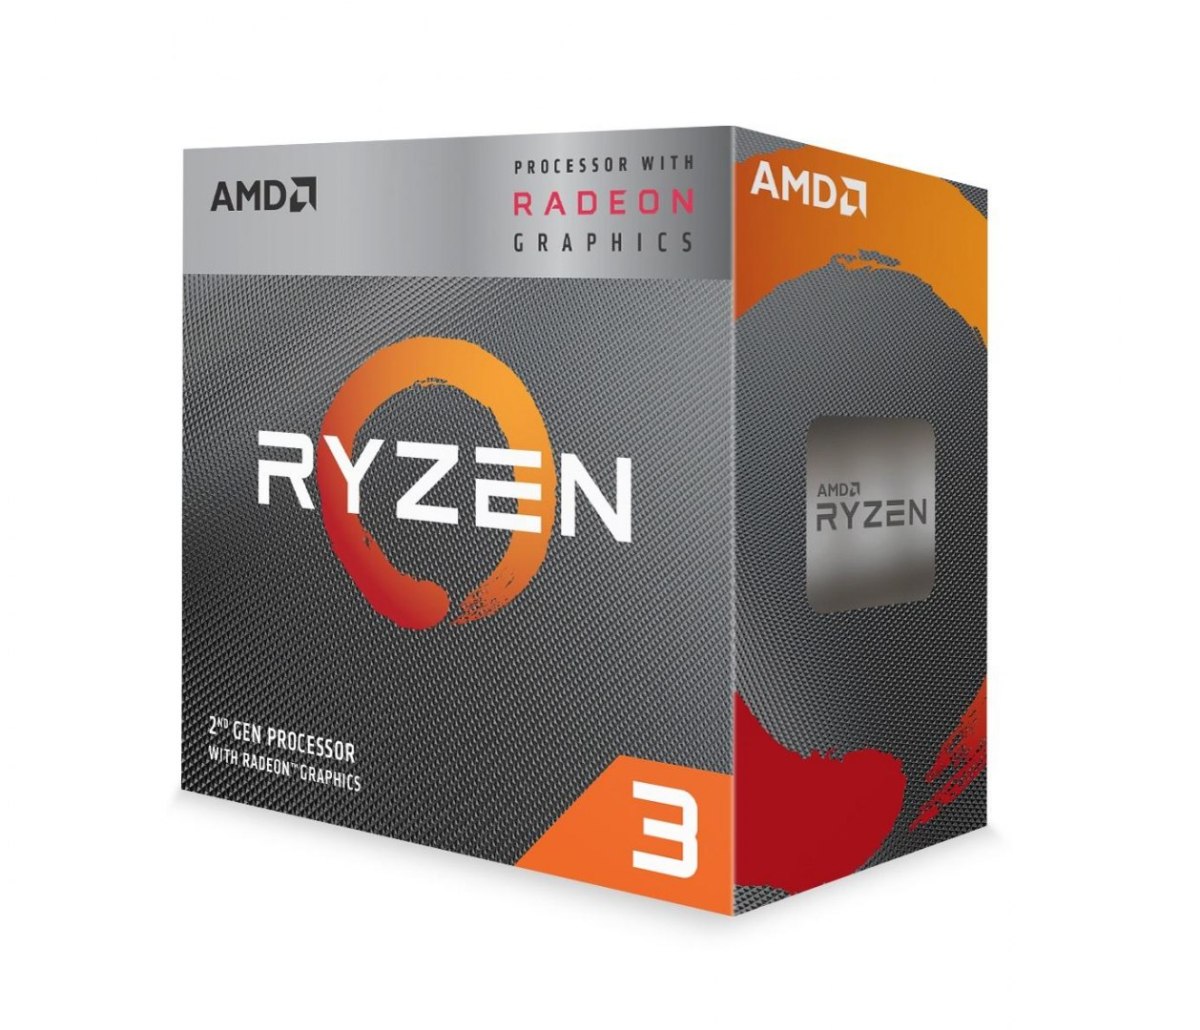 Procesor AMD Ryzen 3 3200G (4MB Cache, up to 4.0 GHz)